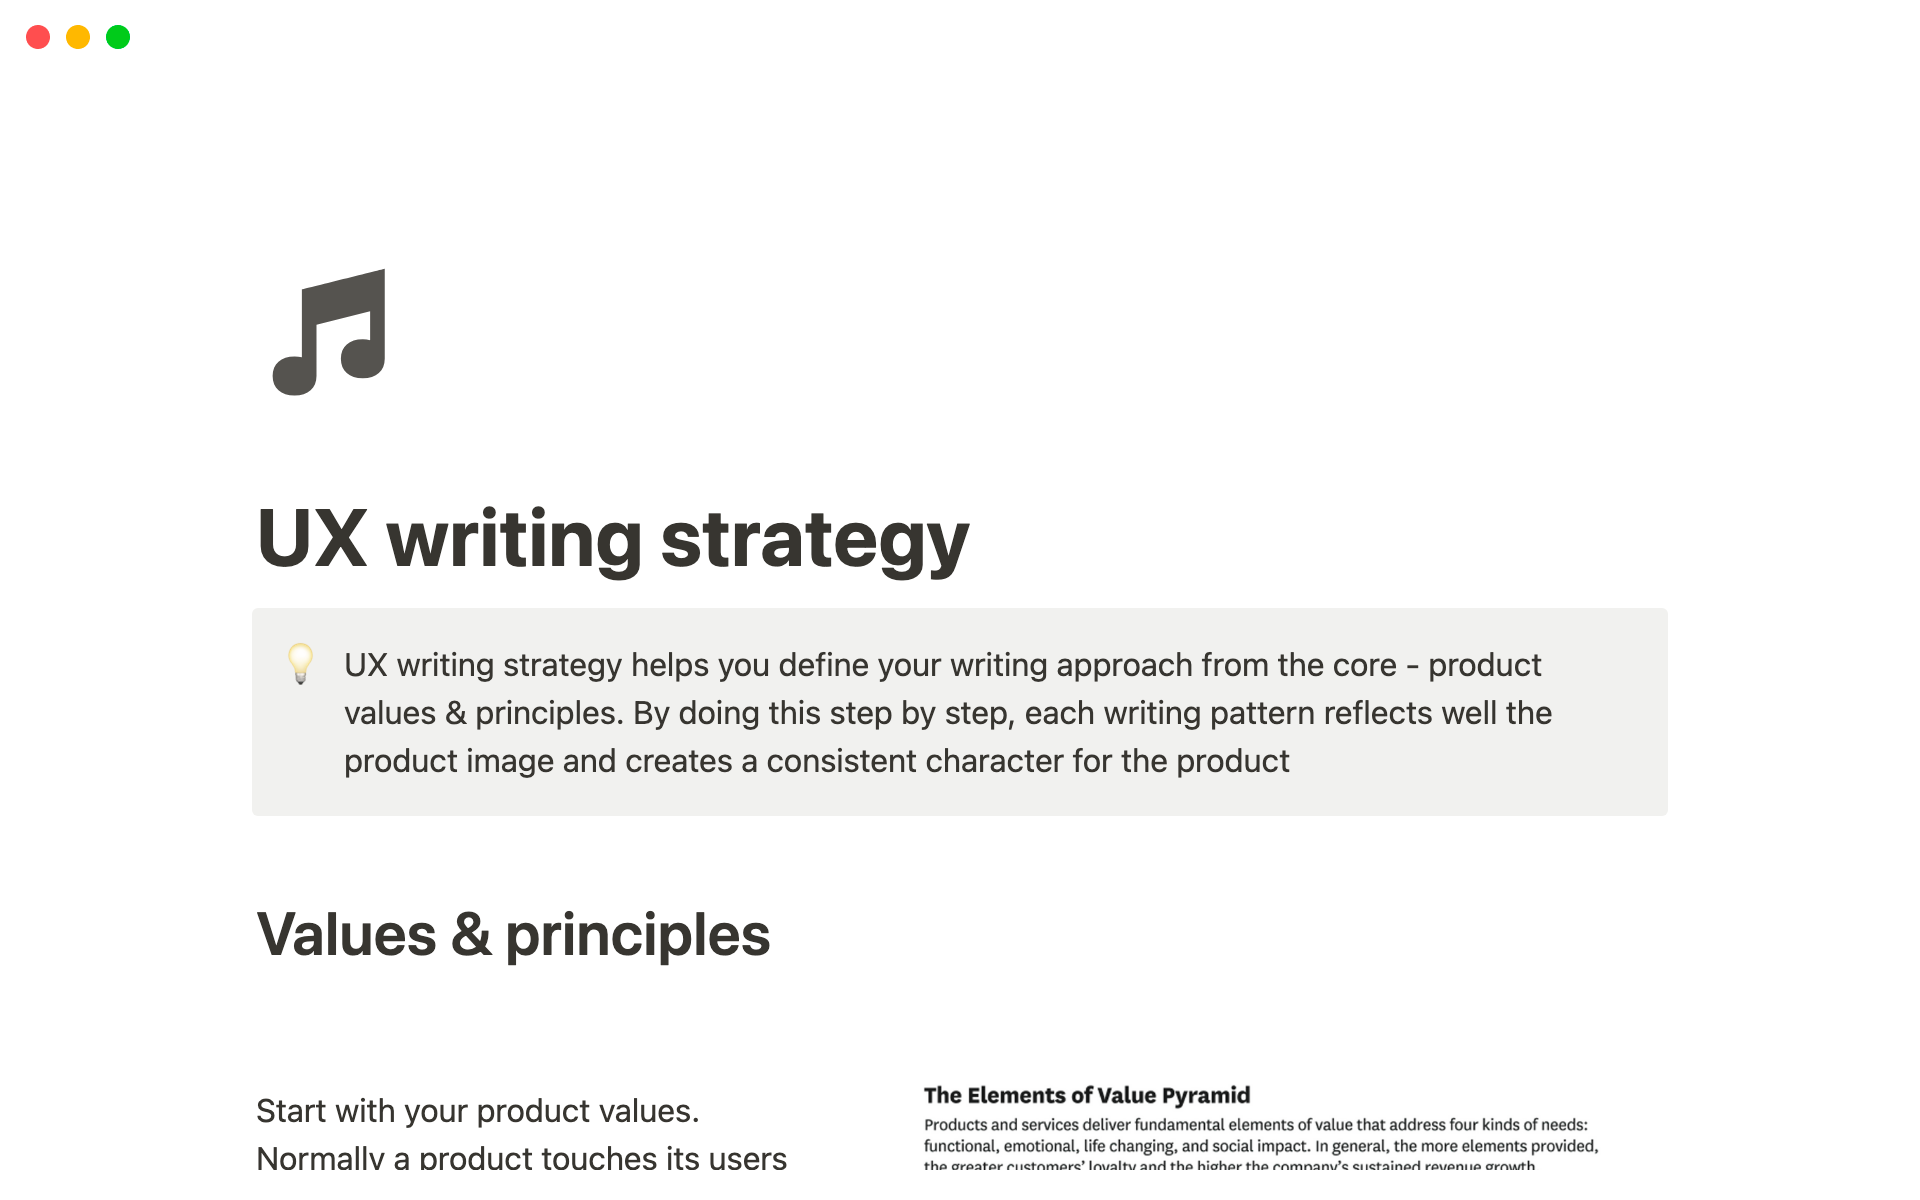 Aperçu du modèle de UX writing strategy